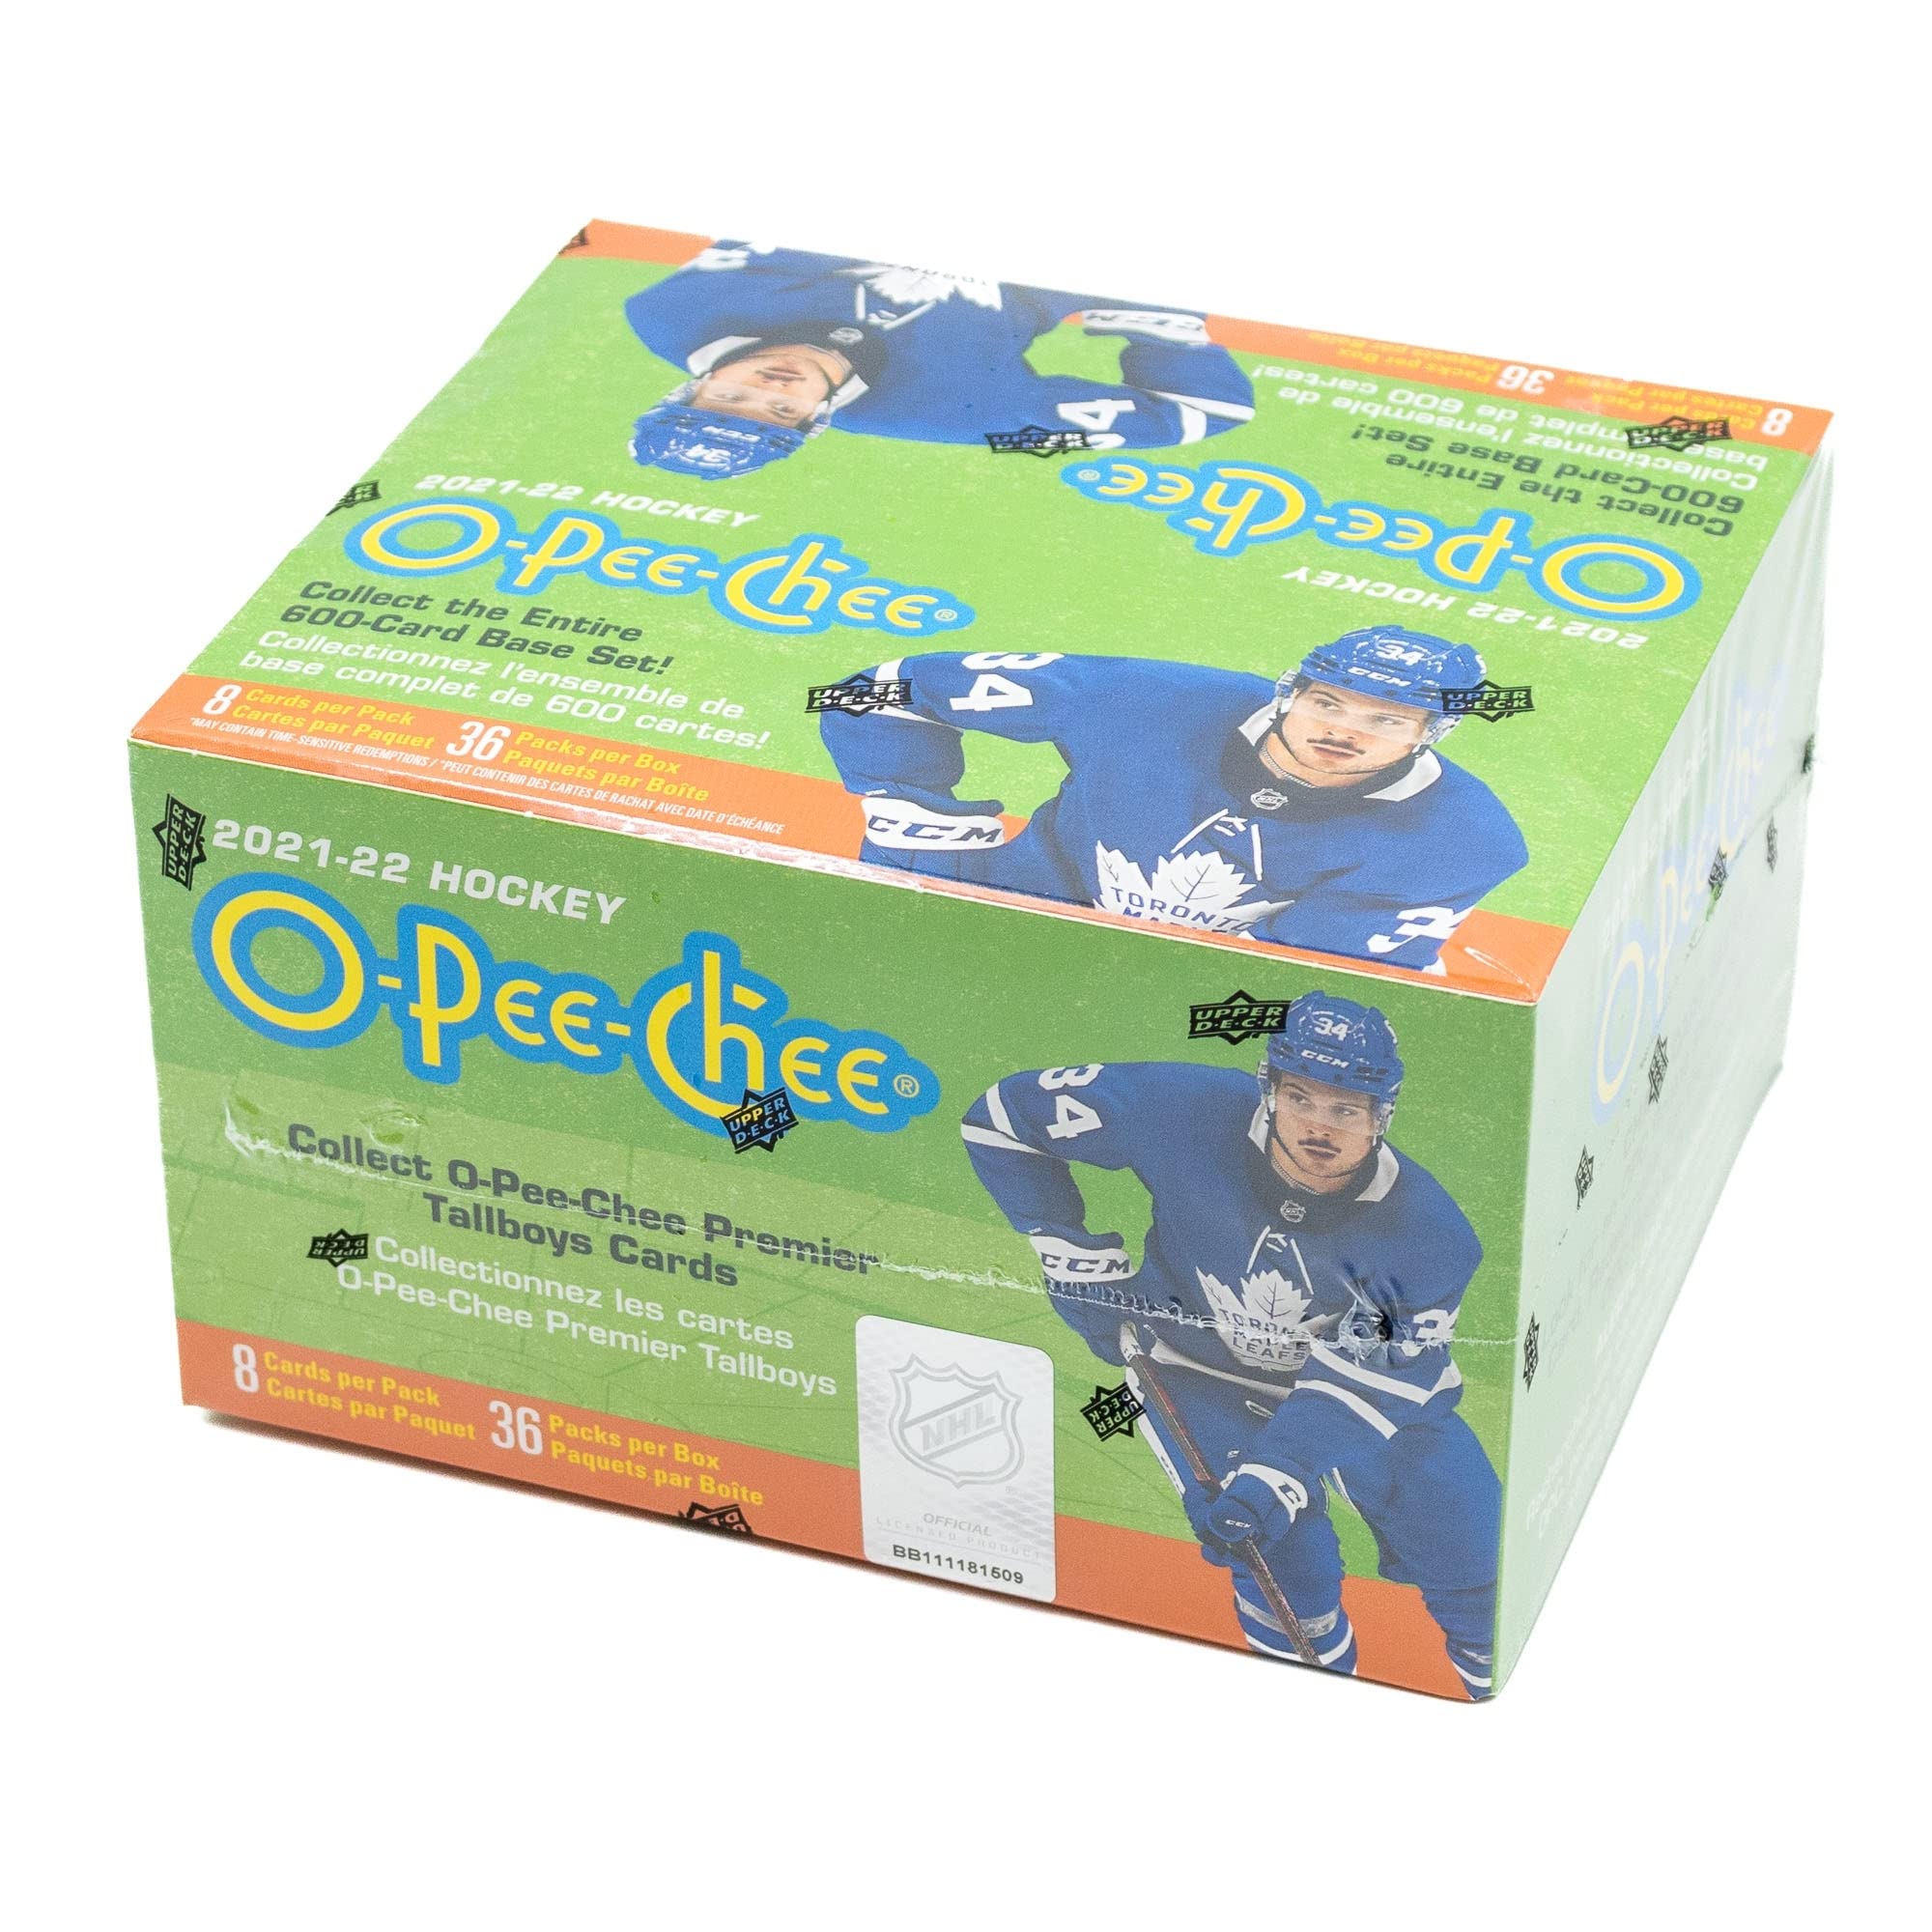 2021/22 Upper Deck 0-Pee-Chee NHL Hockey Retail Box 36 Packs/Box Factory Sealed